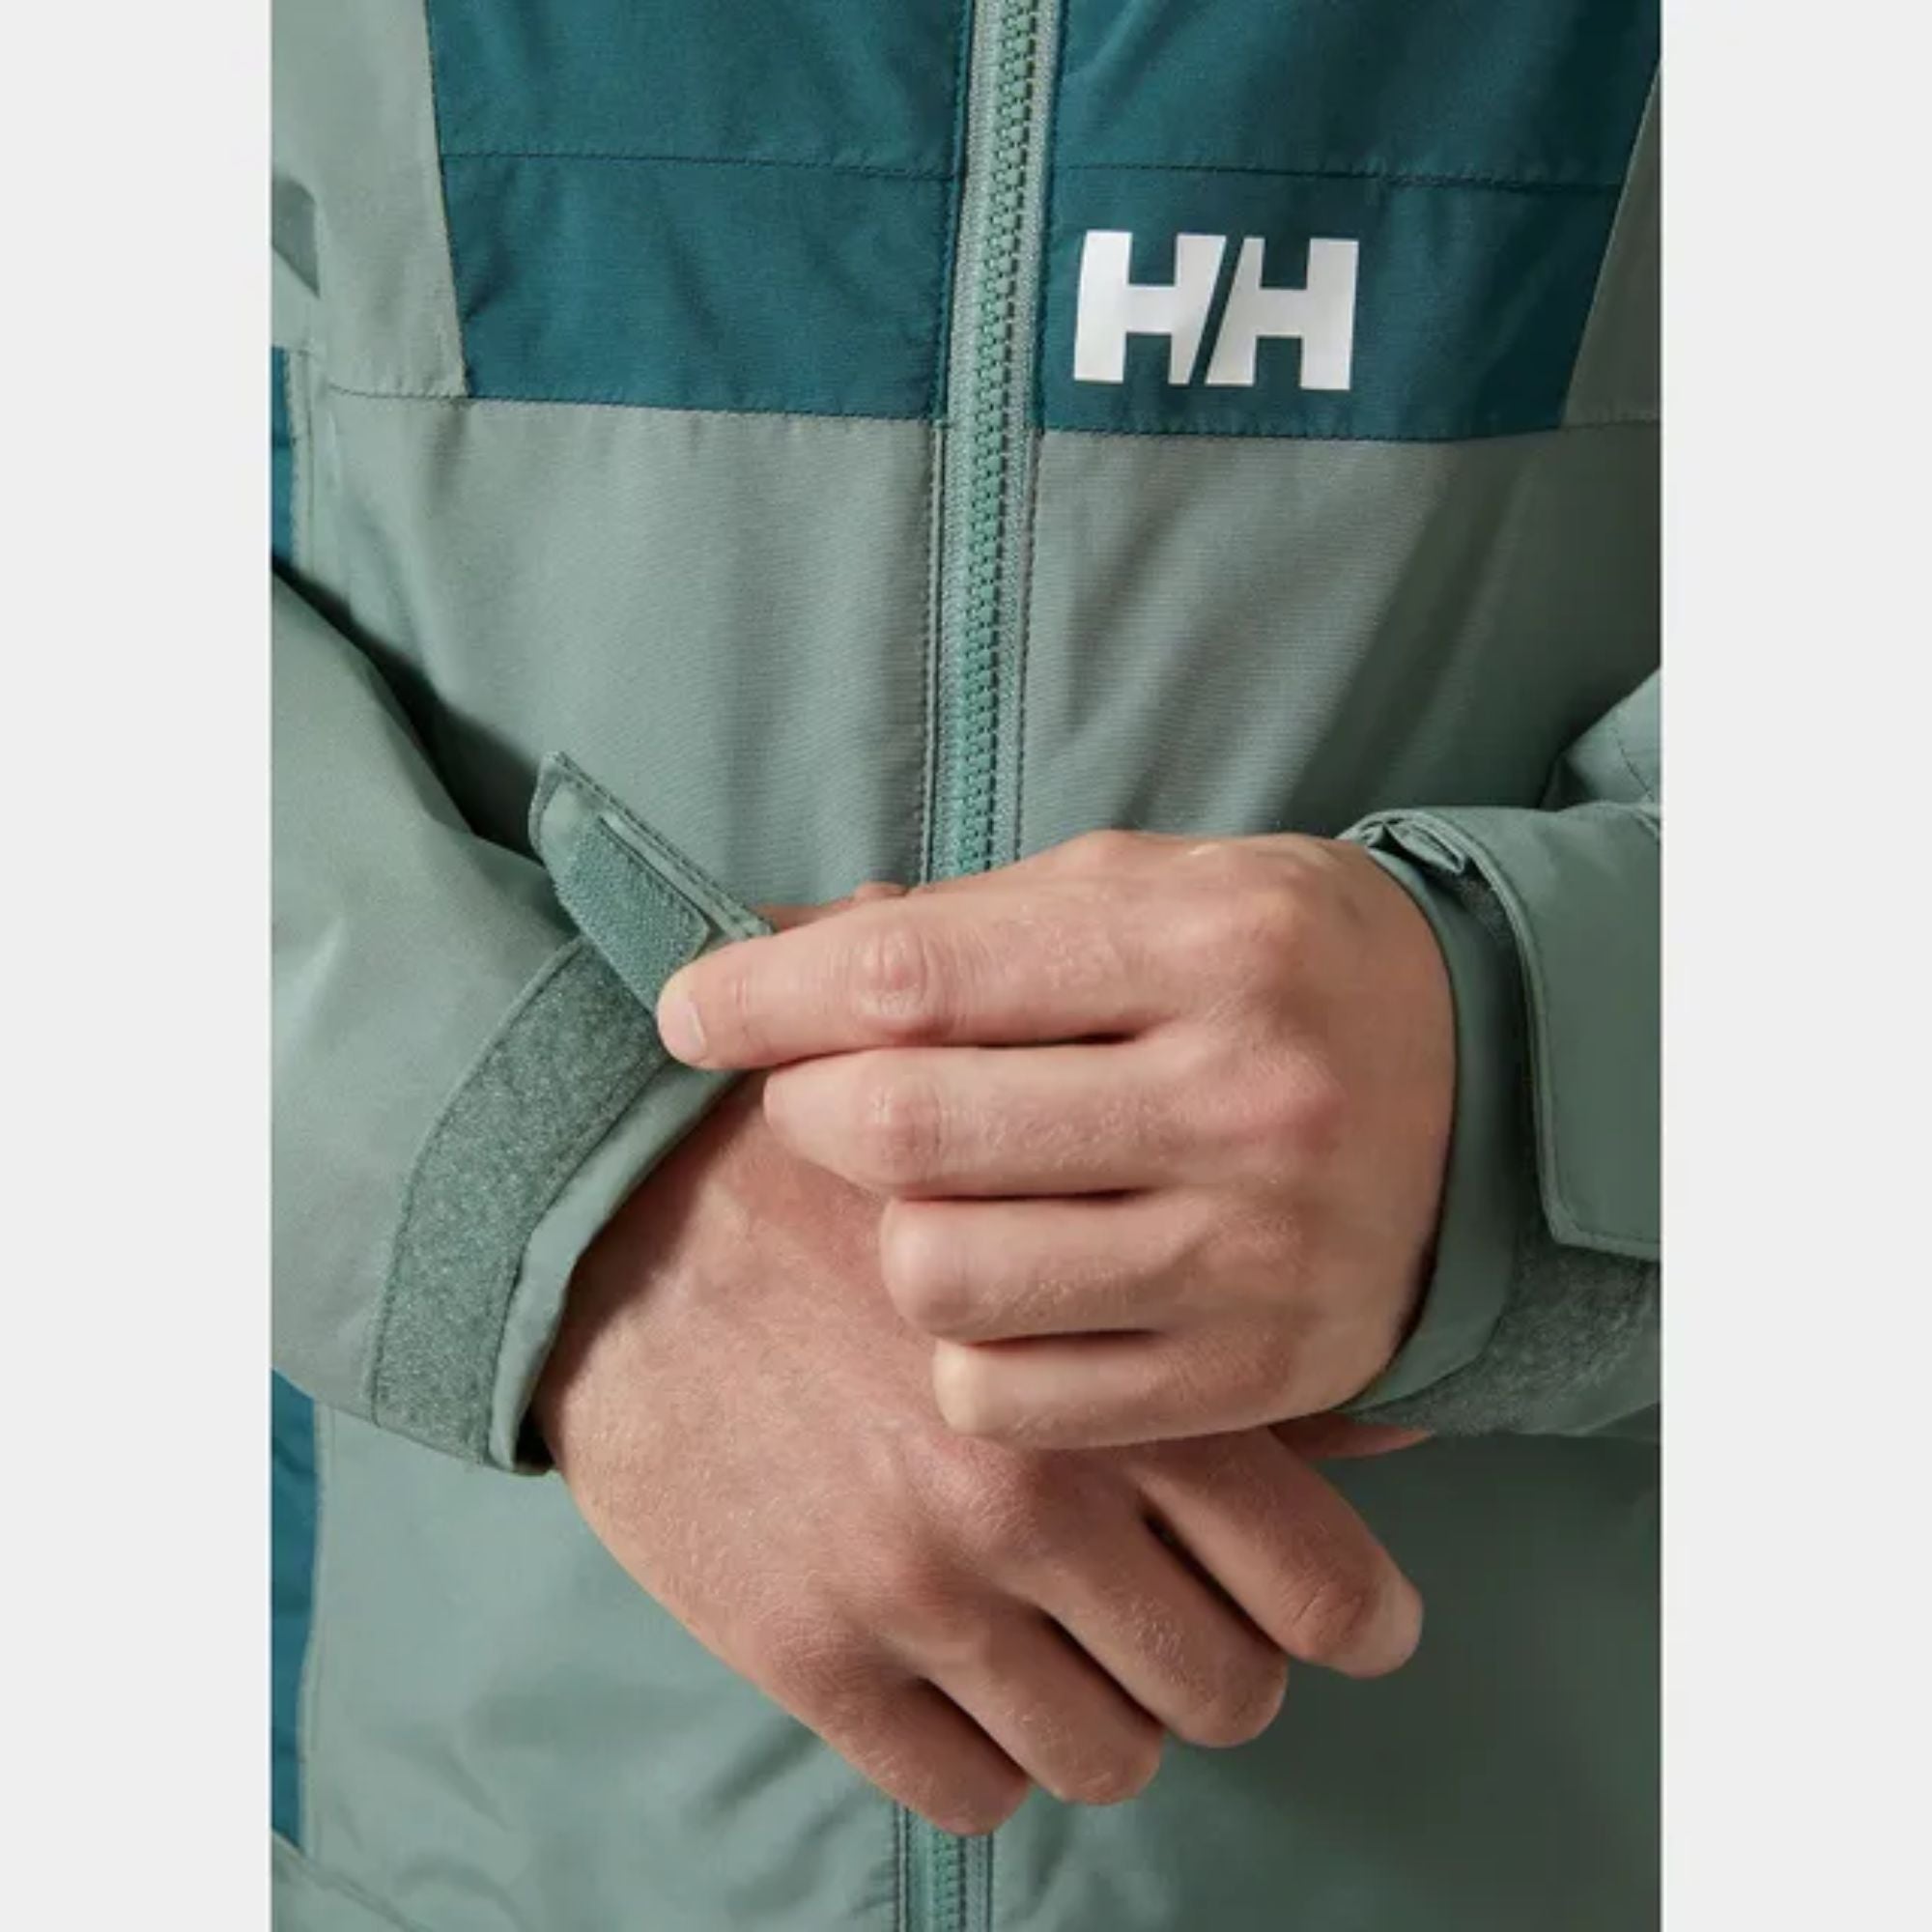 Helly Hansen Men's Rig Rain Jacket | HELLY HANSEN | Portwest - The Outdoor Shop